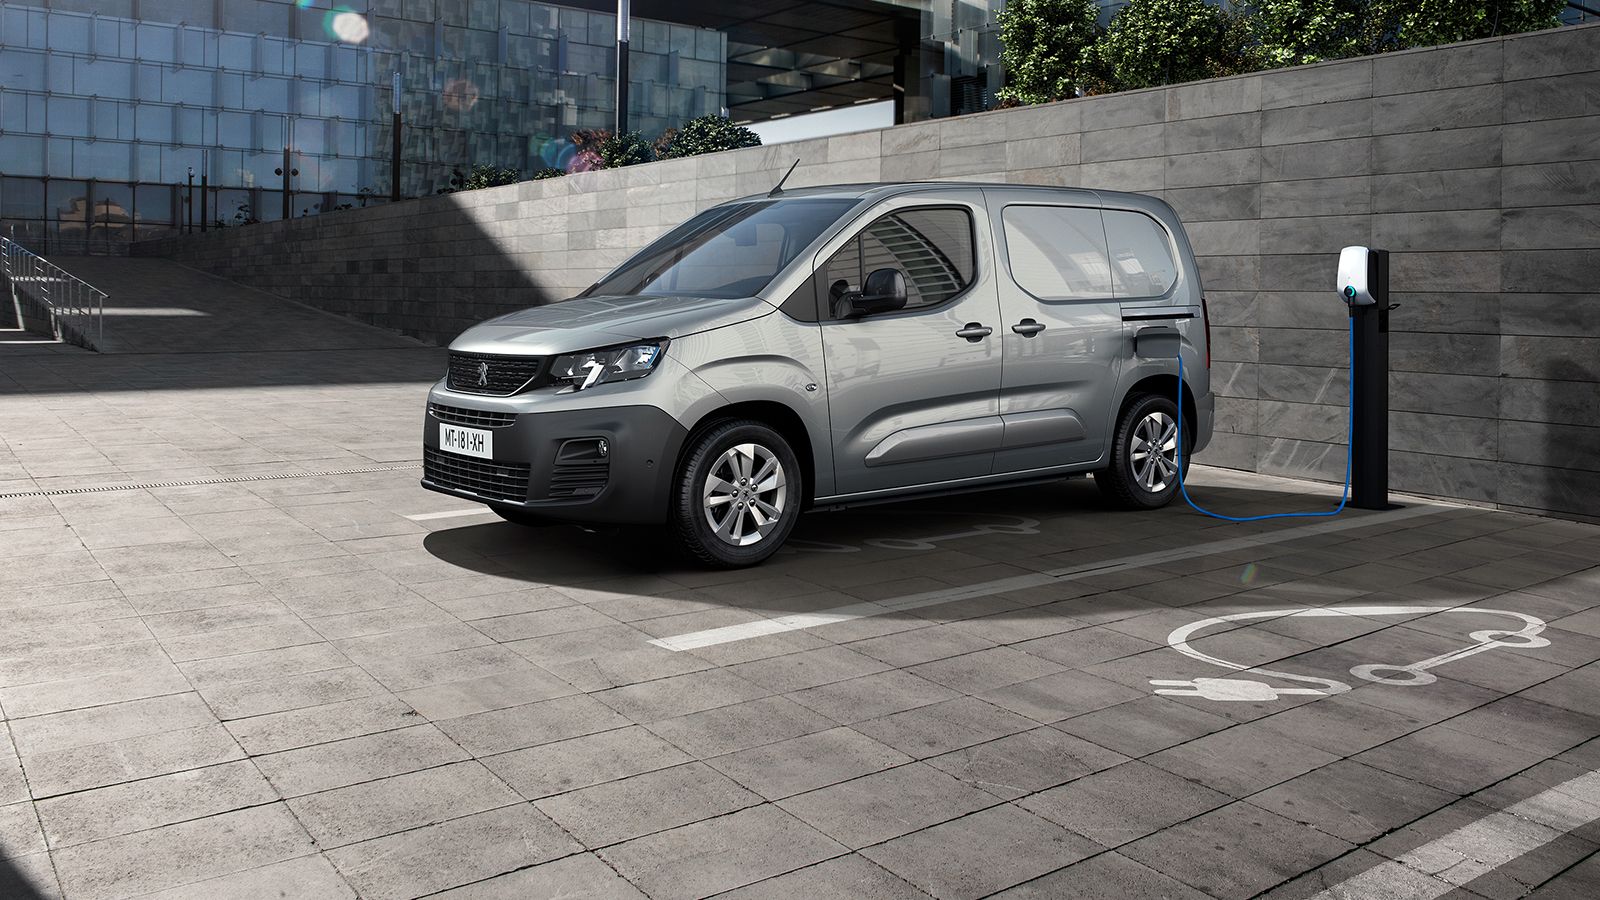 To νέο -αμιγώς ηλεκτρικό- Peugeot e-Partner έχει χρόνο αναμονής για νέες παραγγελίες από 5 έως 7 μήνες.